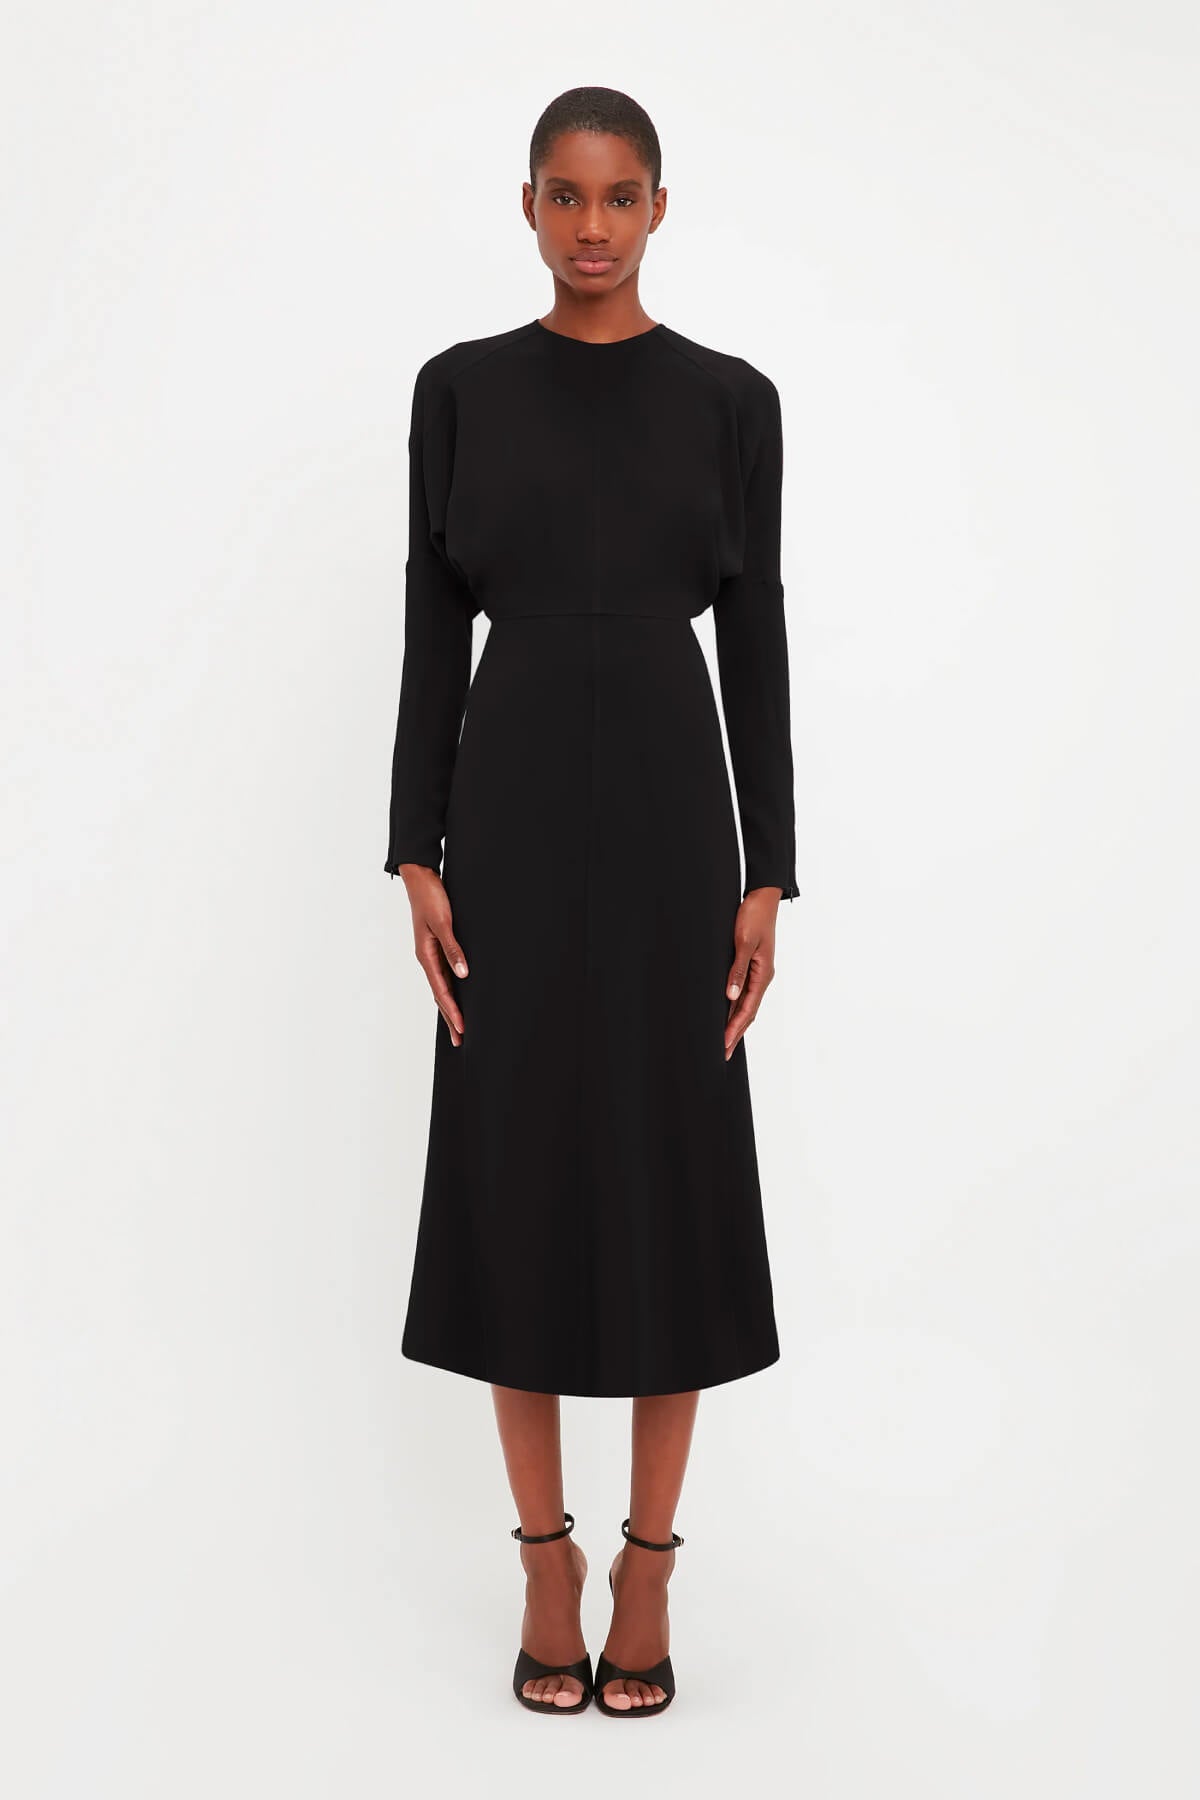 Victoria Beckham Dolman Midi Dress - Black